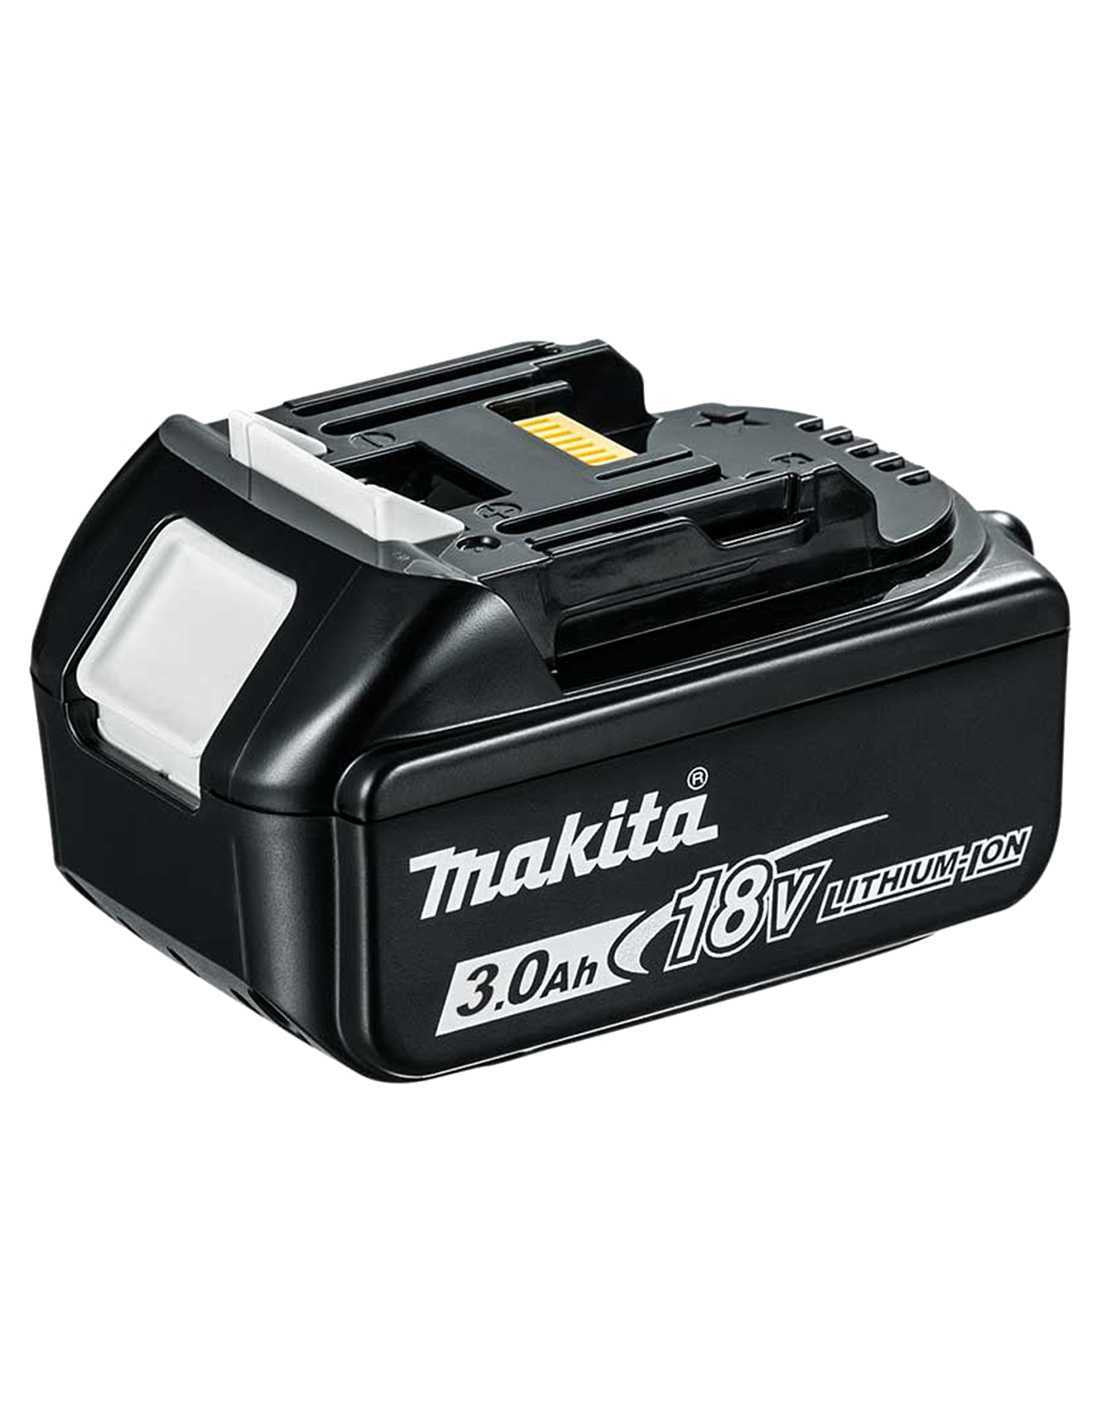 Makita kit with 7 tools + 3bat 5Ah + DC18RC charger + 2 bags DLX7243BL3